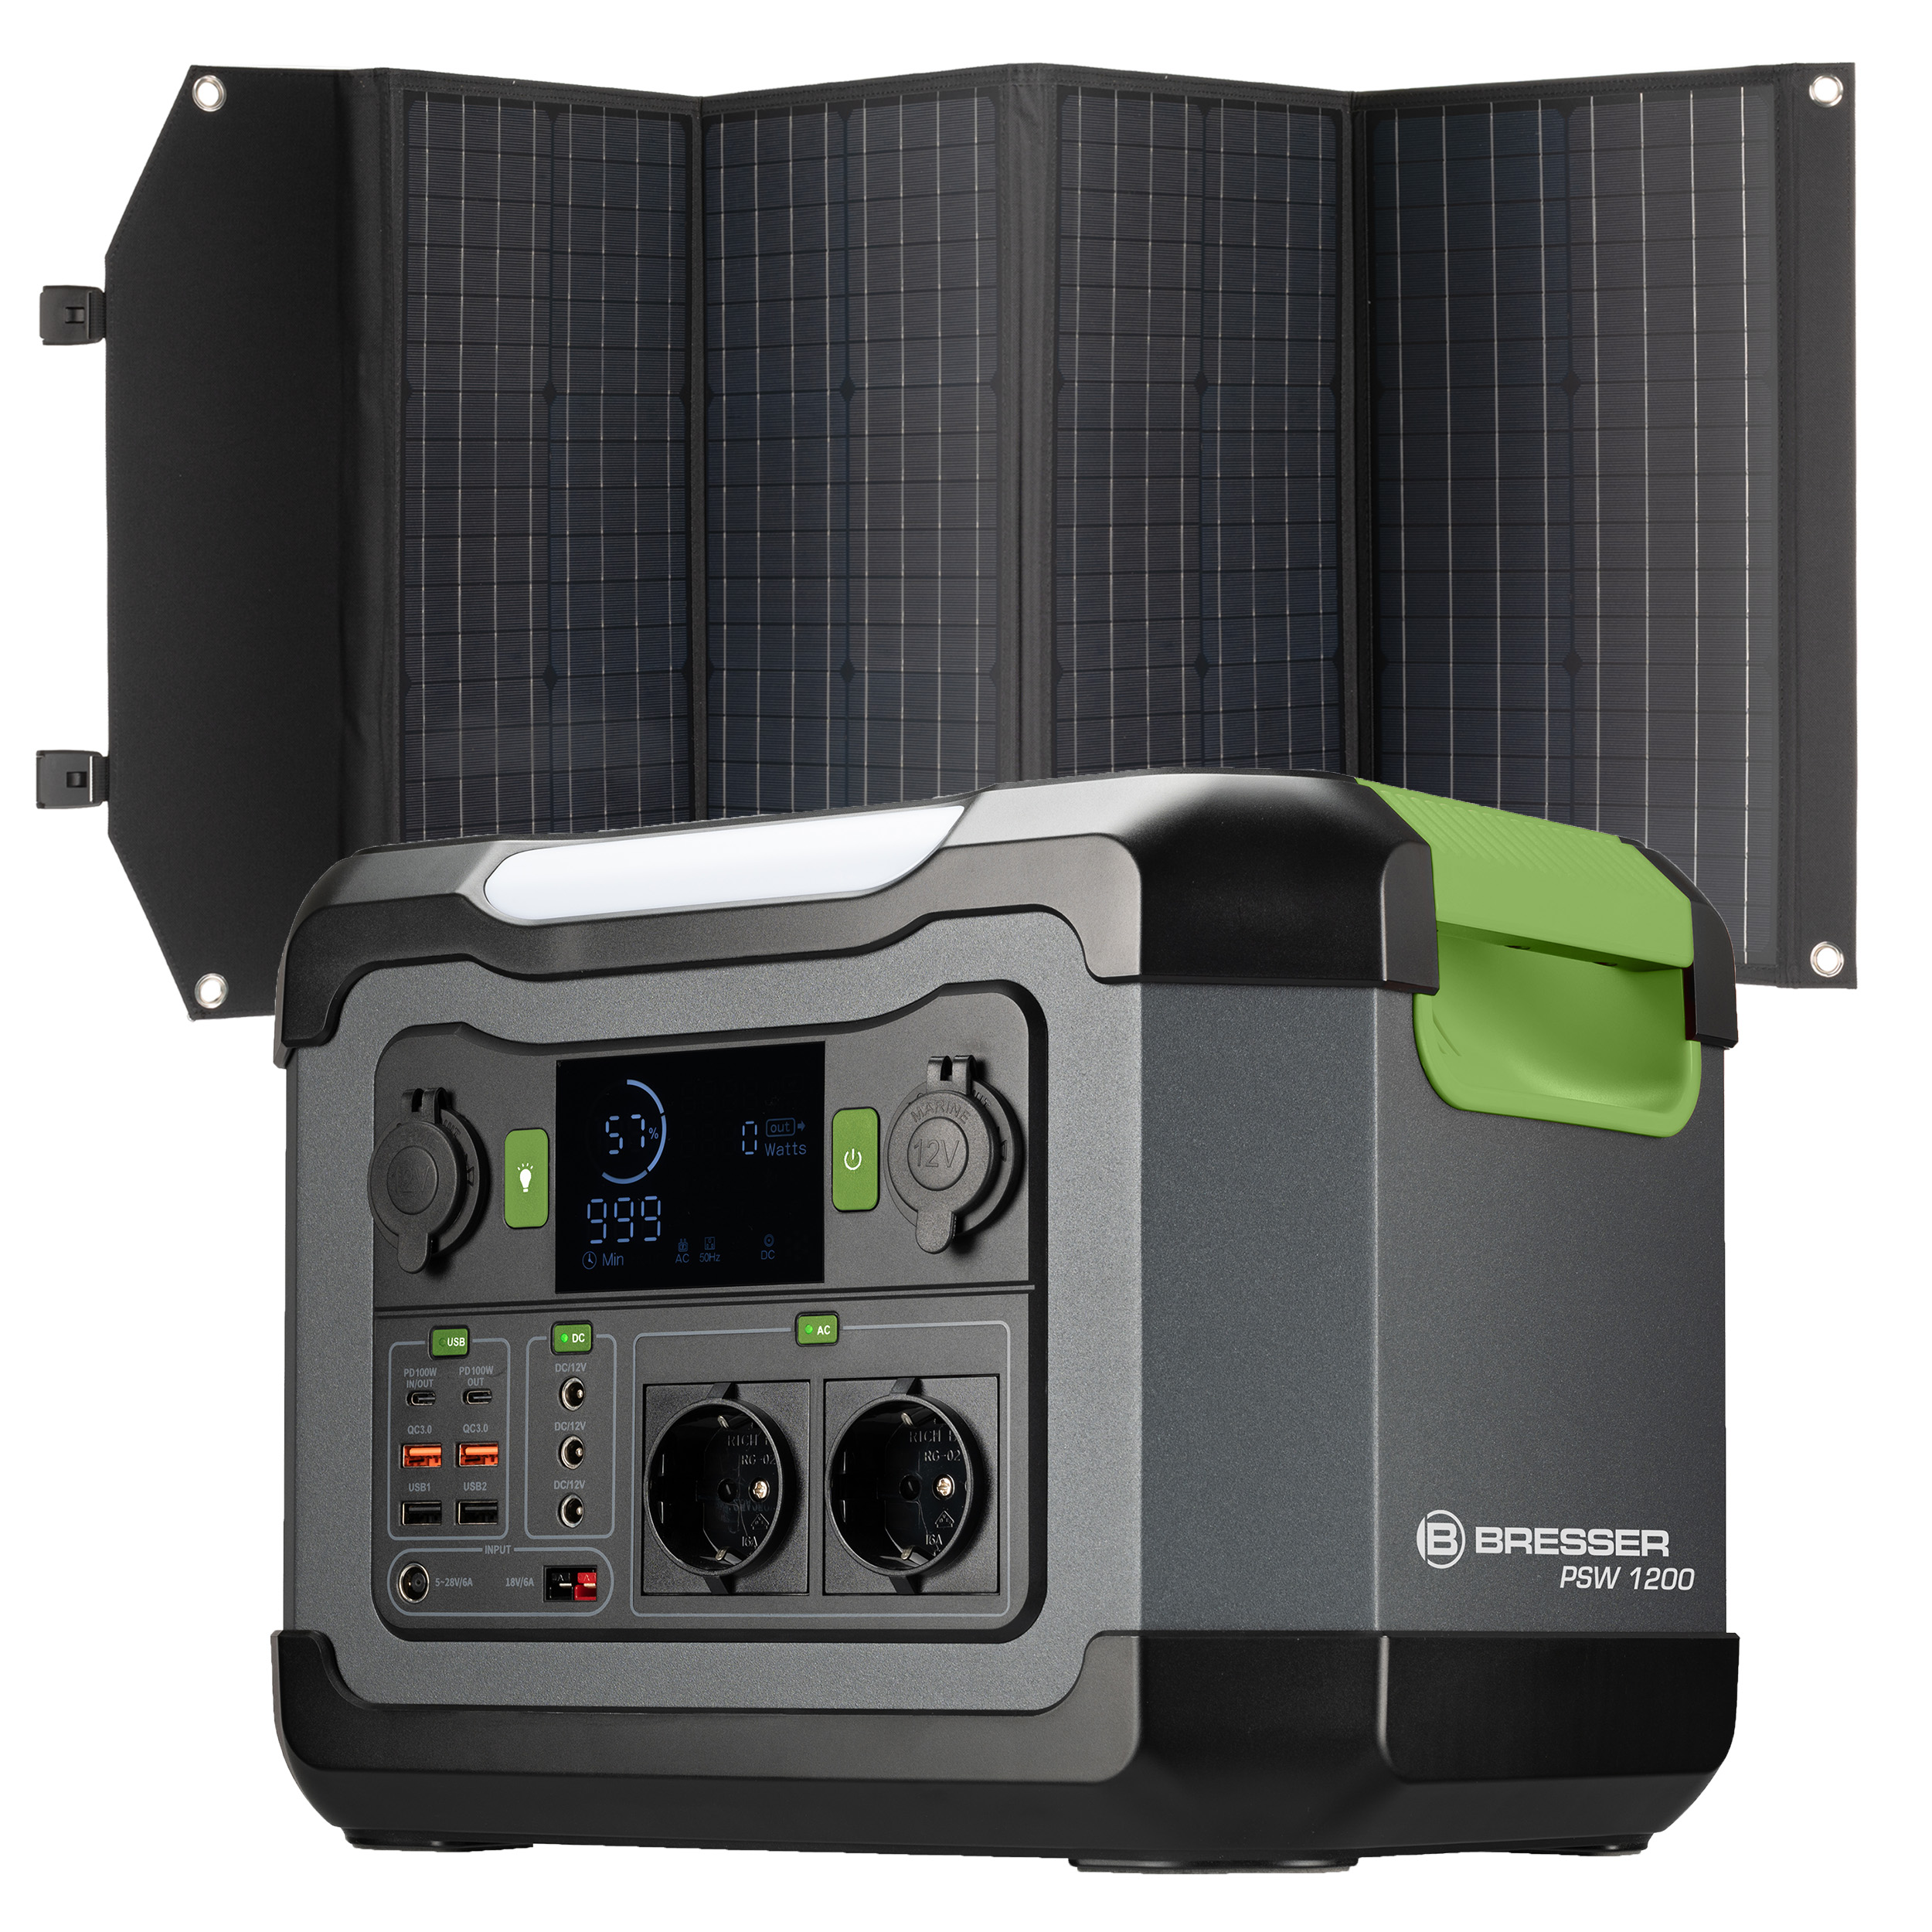 BRESSER Set central eléctrica portátil 1200 W + cargador solar móvil 120 W